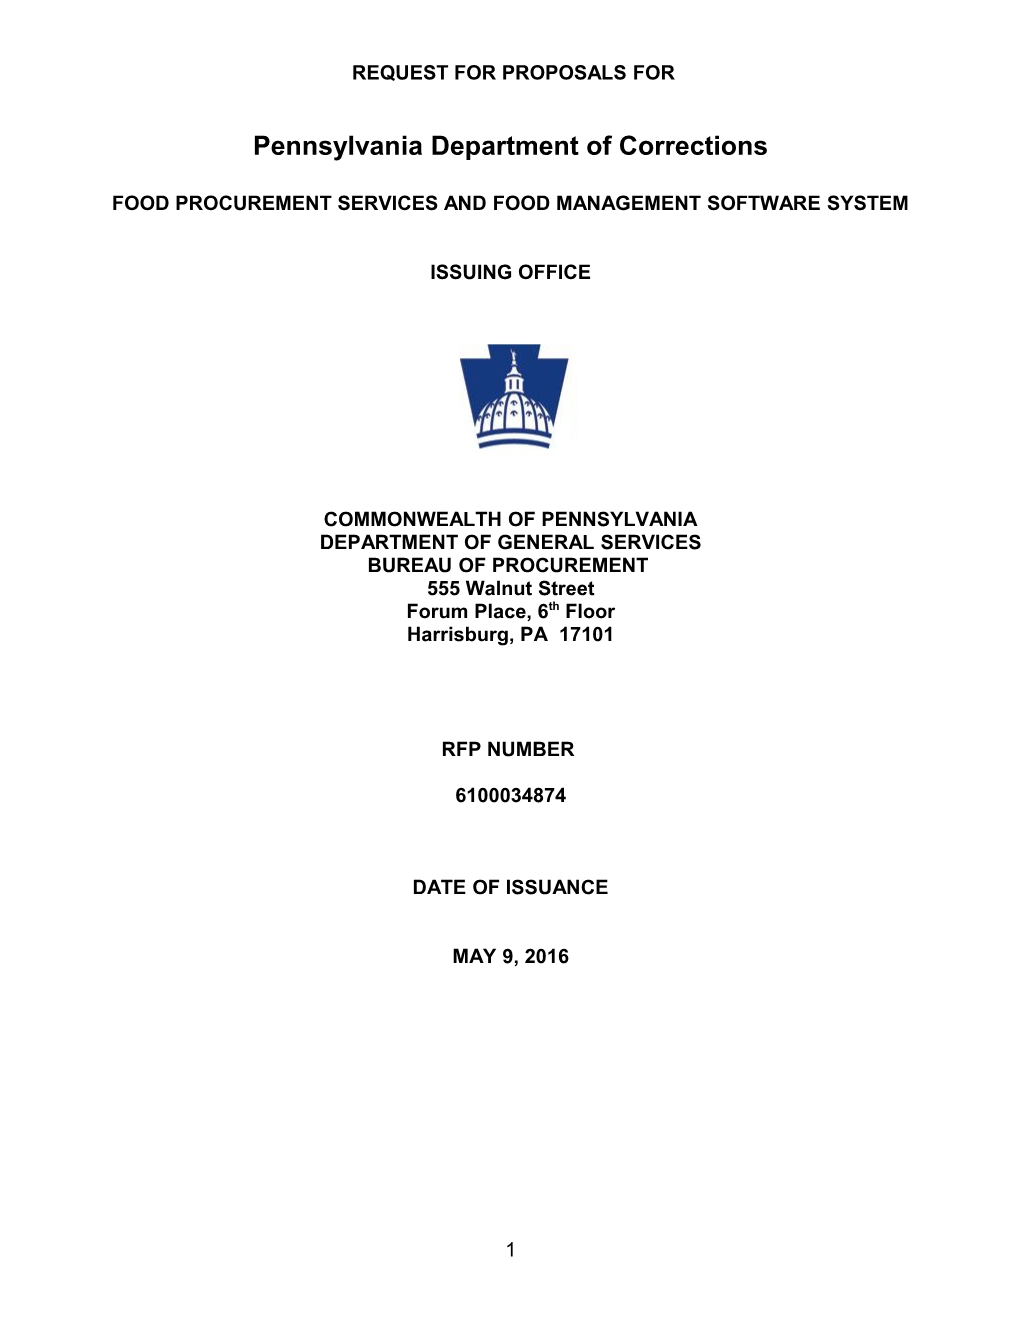 Food Procurement Services and Food Management Software System